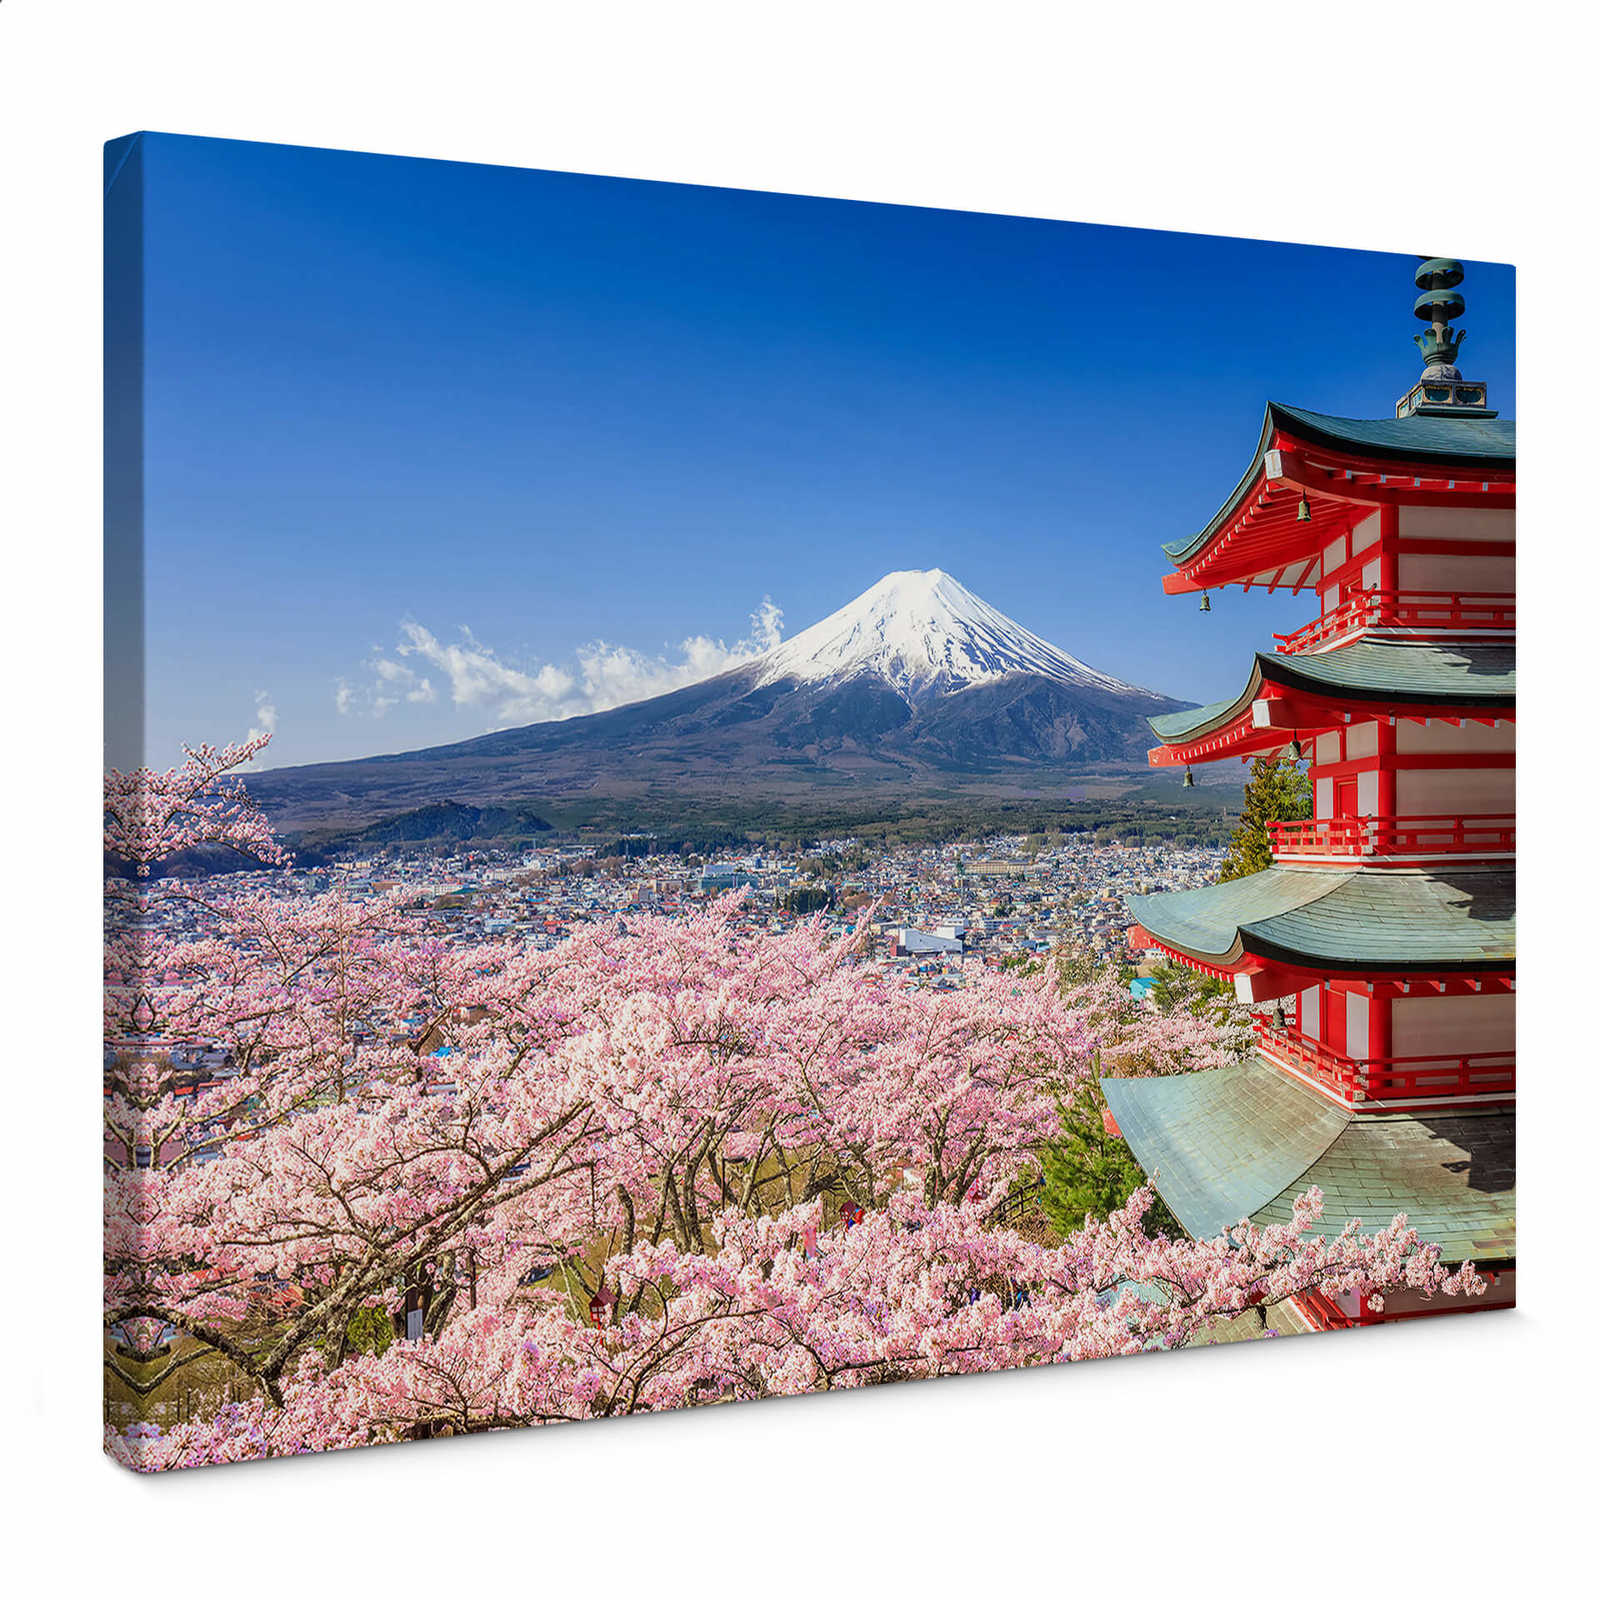         Fujiyama Leinwandbild mit Kirschblüten & Pagode – 0,70 m x 0,50 m
    